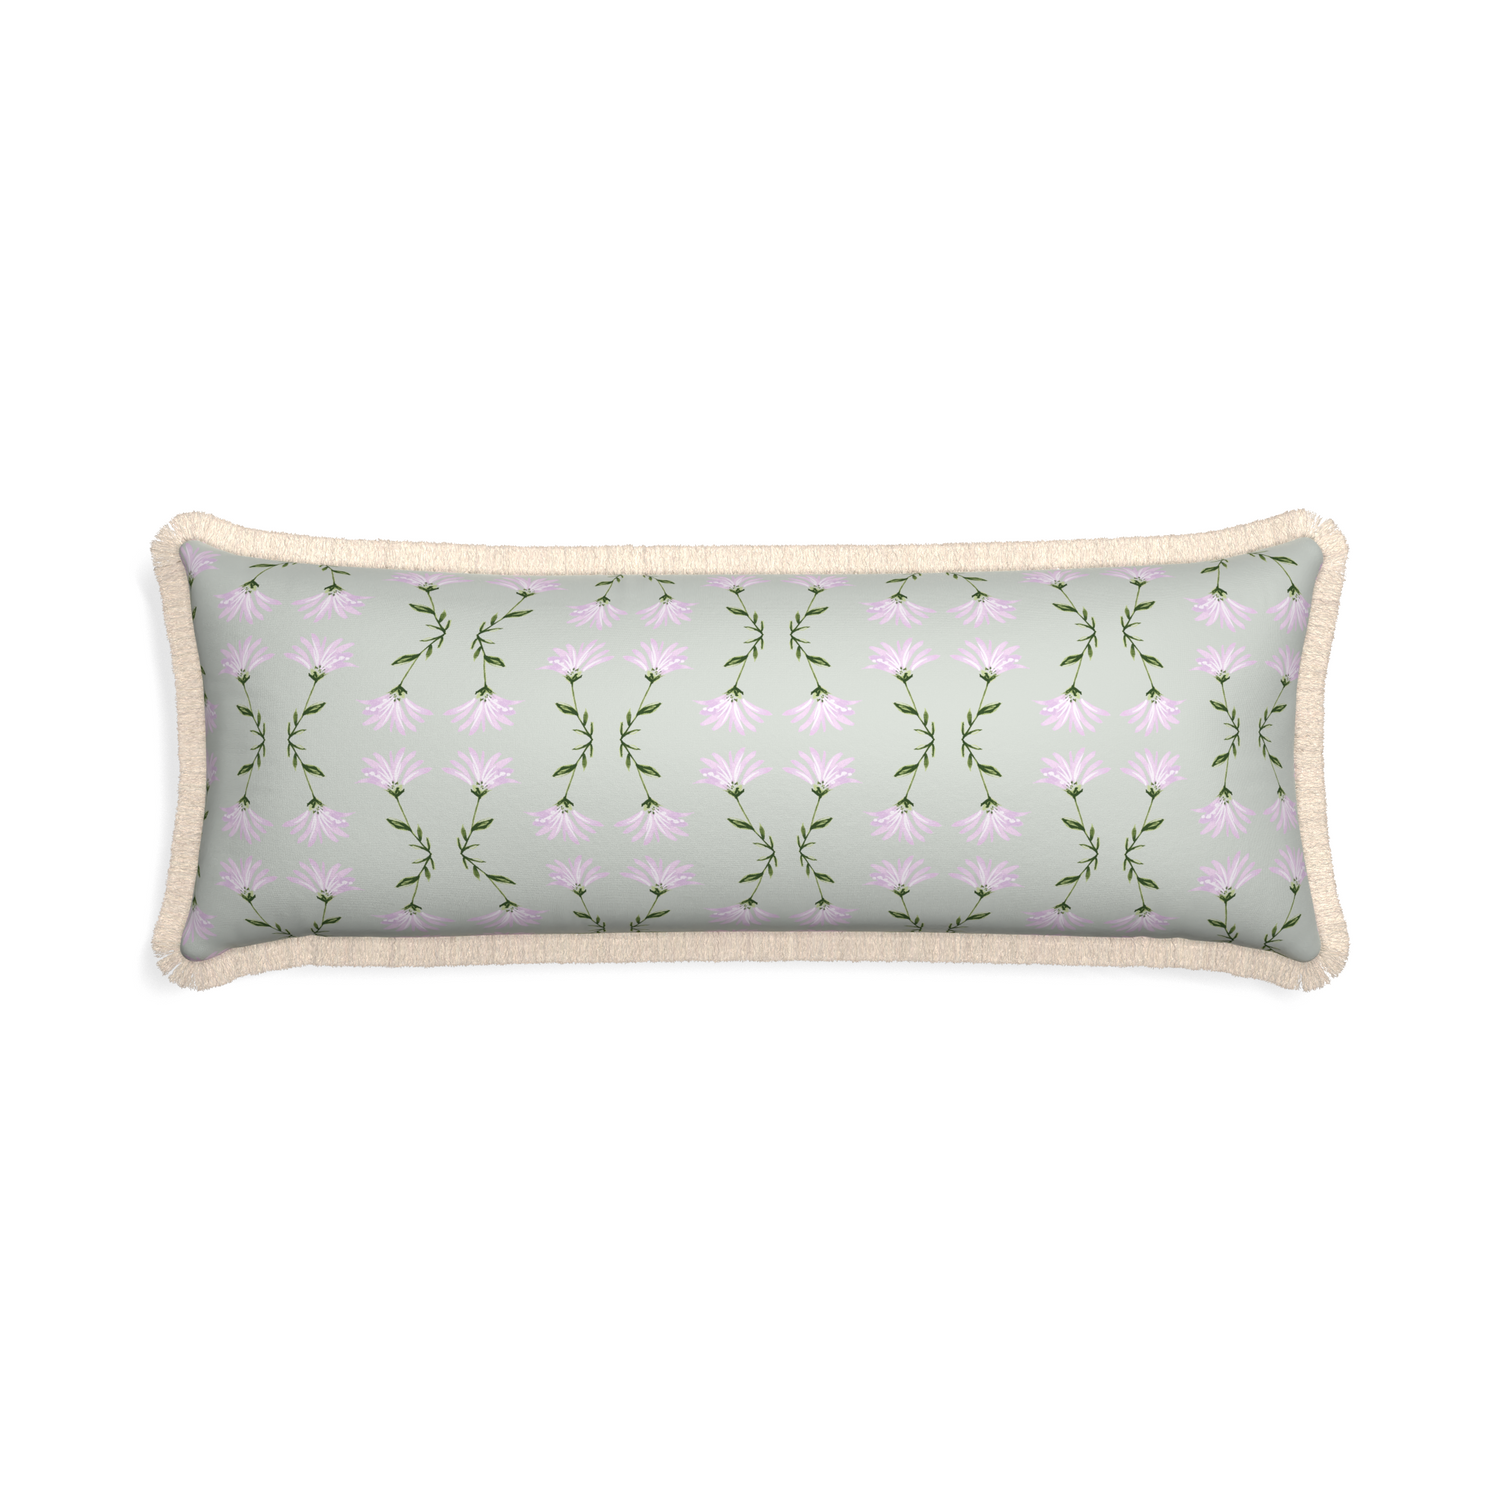 Xl-lumbar marina sage custom pillow with cream fringe on white background